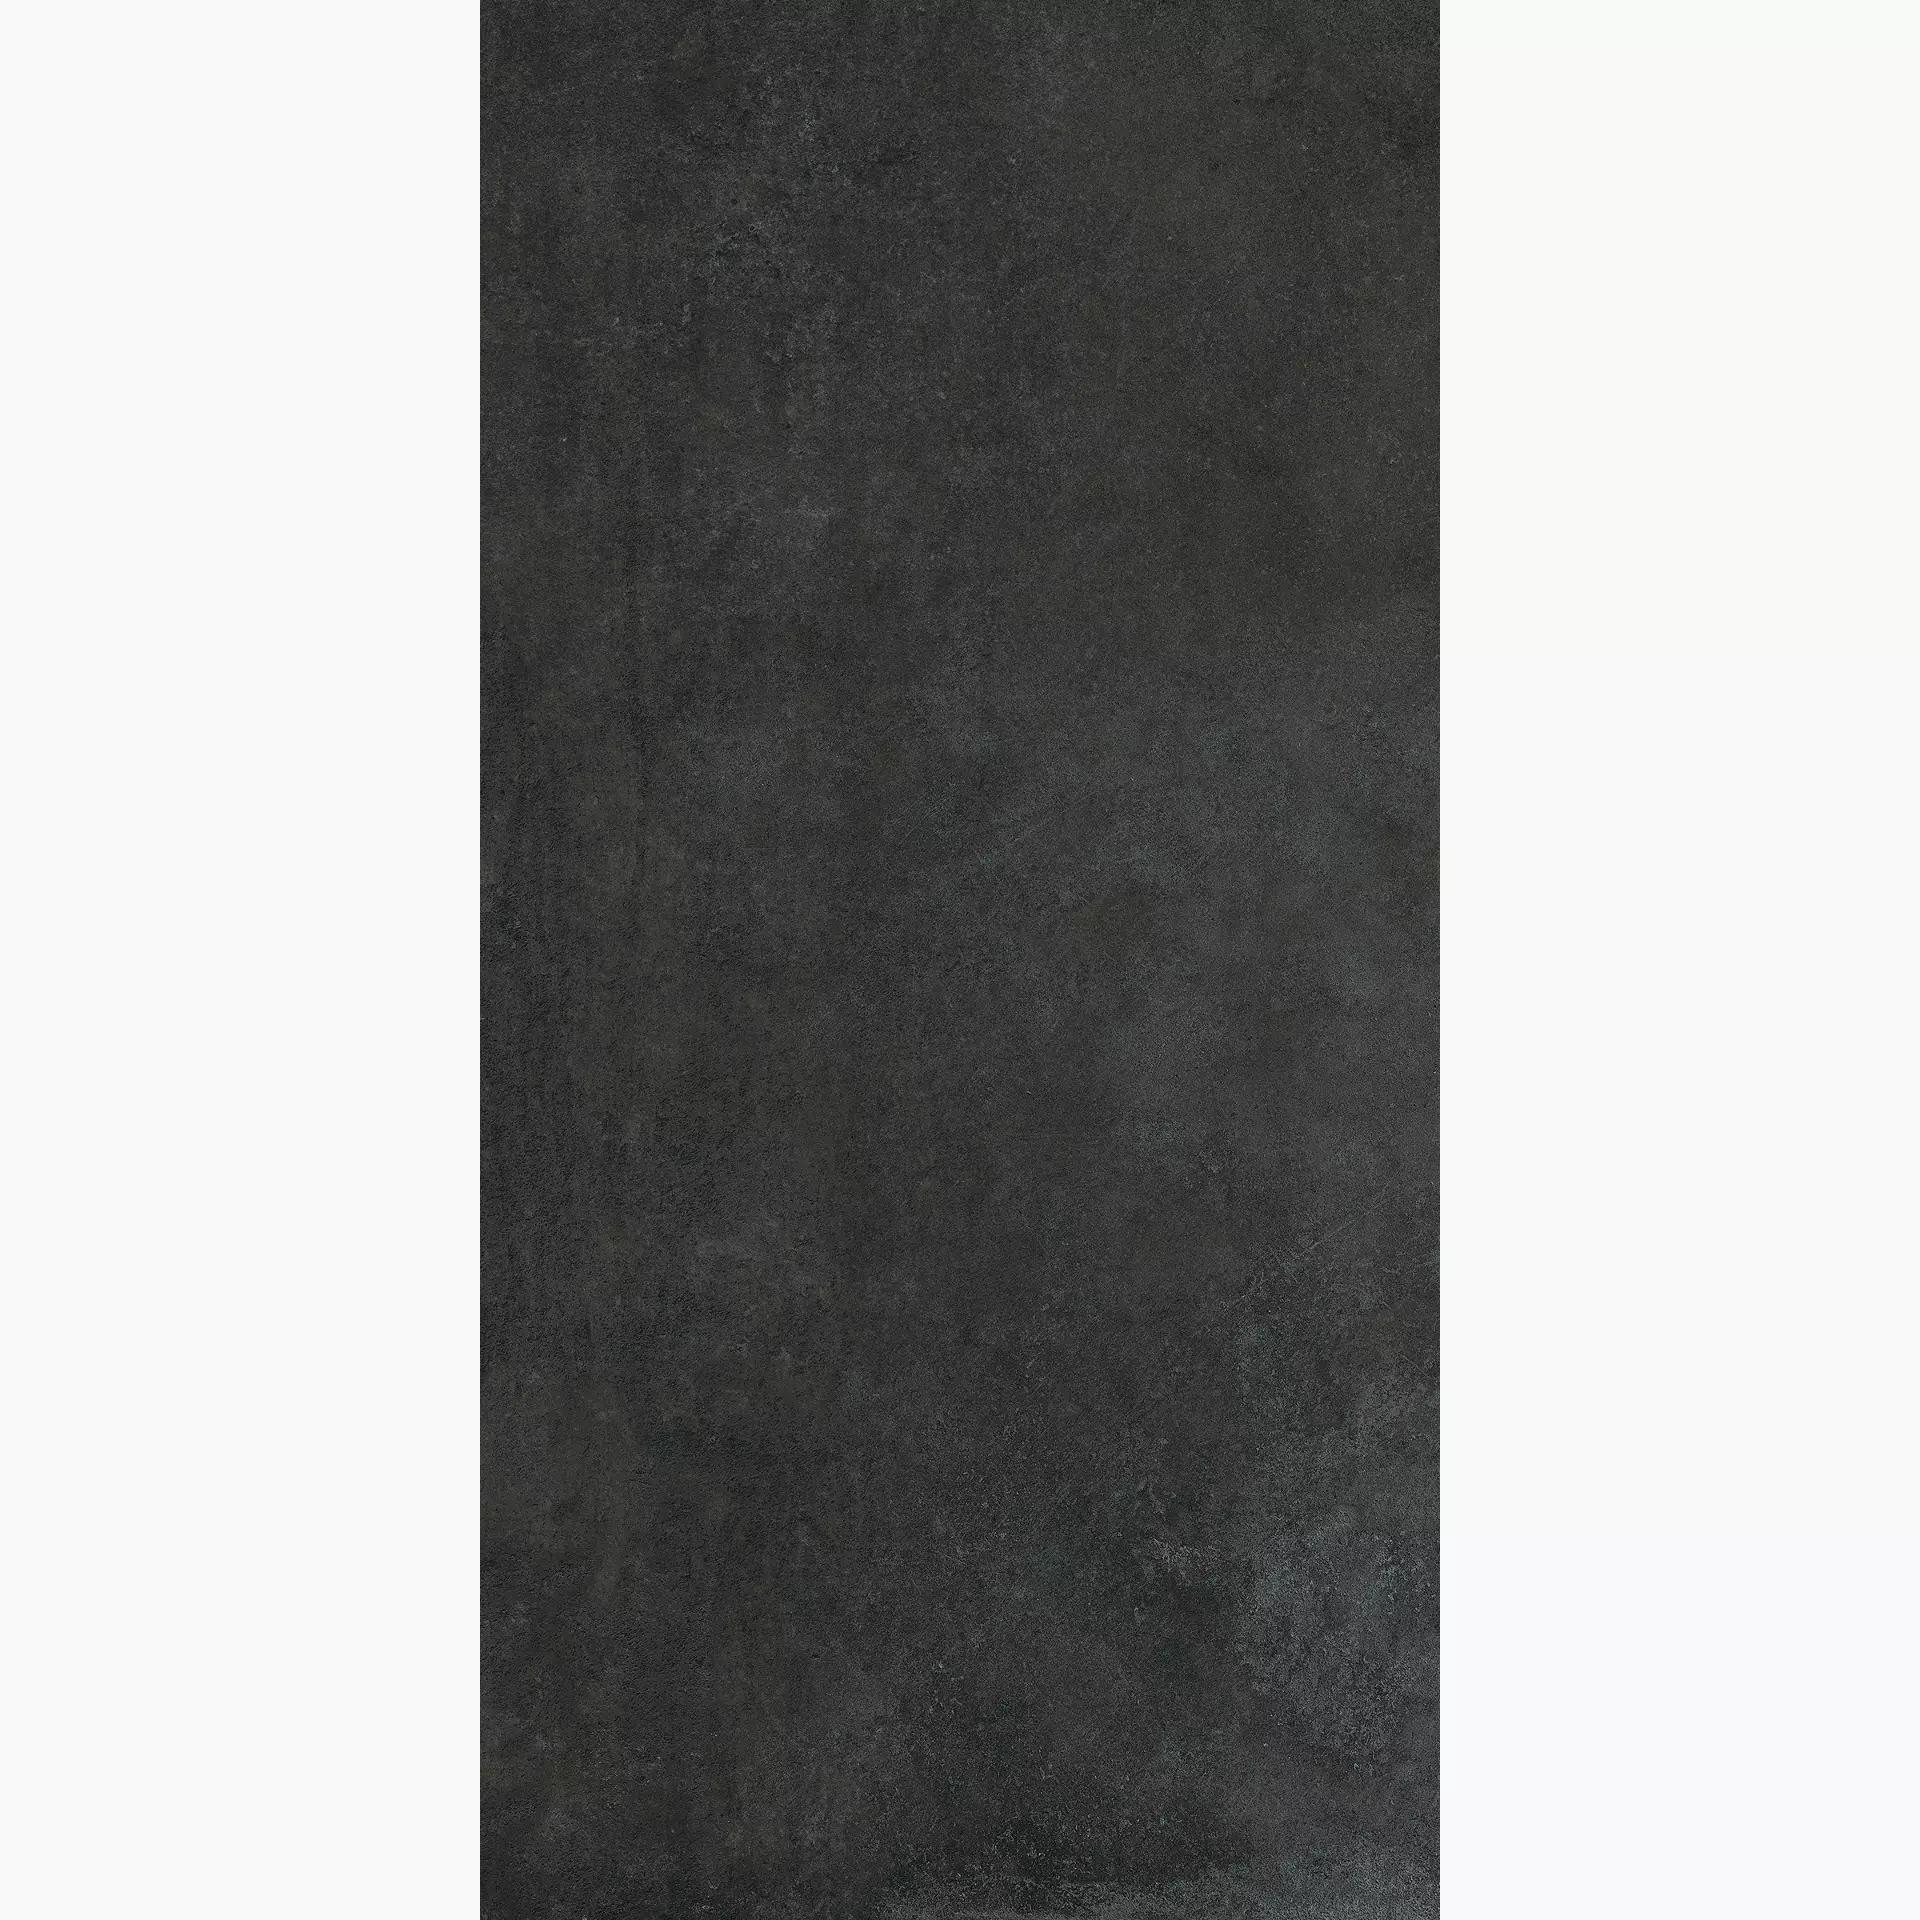 Tagina Apogeo Black Naturale Black 113180 natur 60x120cm rektifiziert 10mm